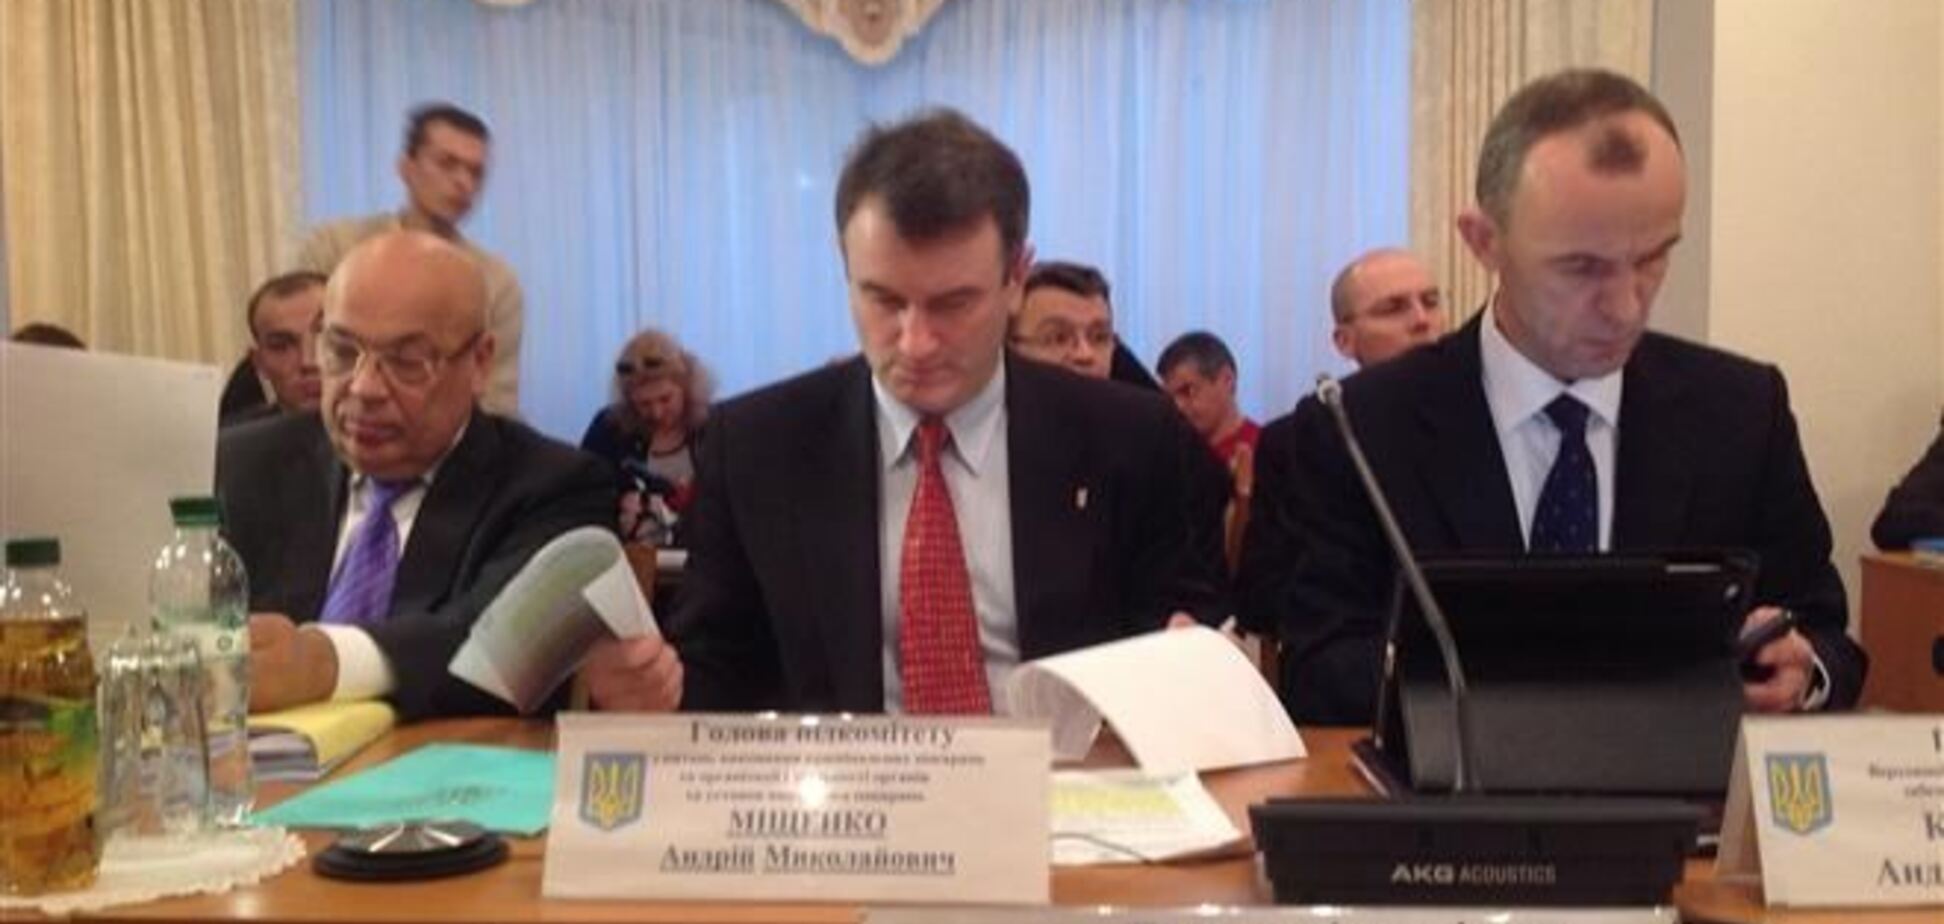 Робоча група по законопроекту Тимошенко виголосила перерву до завтра